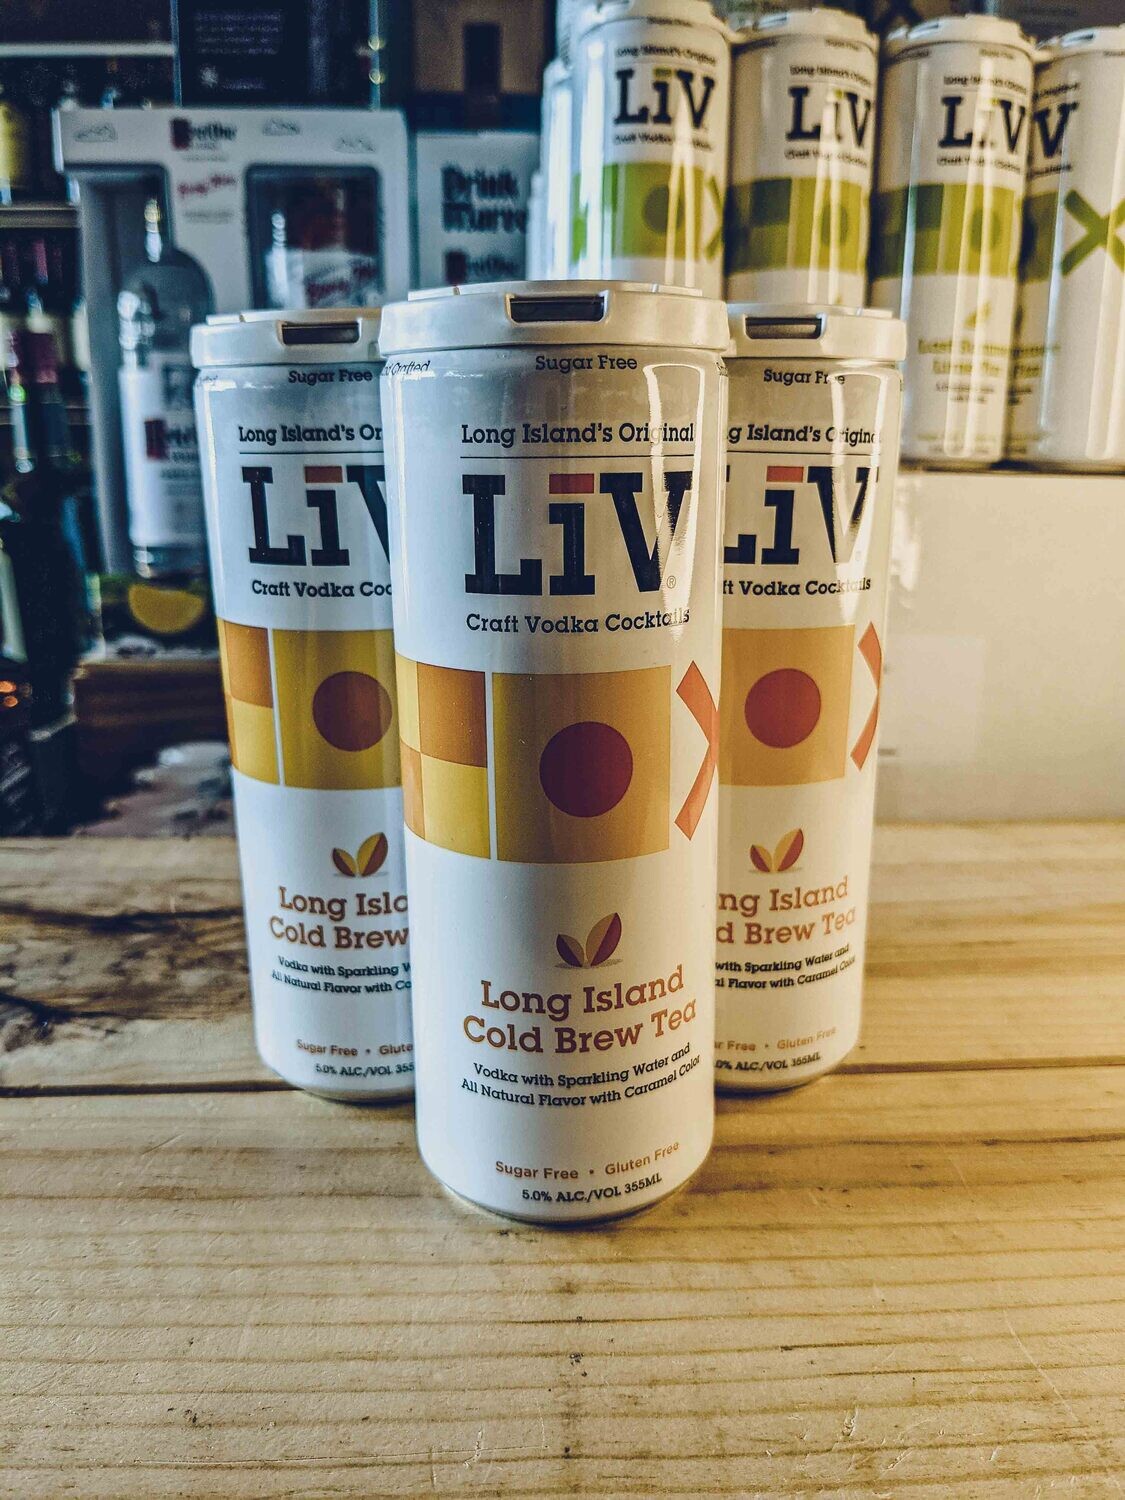 LIV Long Island Brew Tea 4 Pack